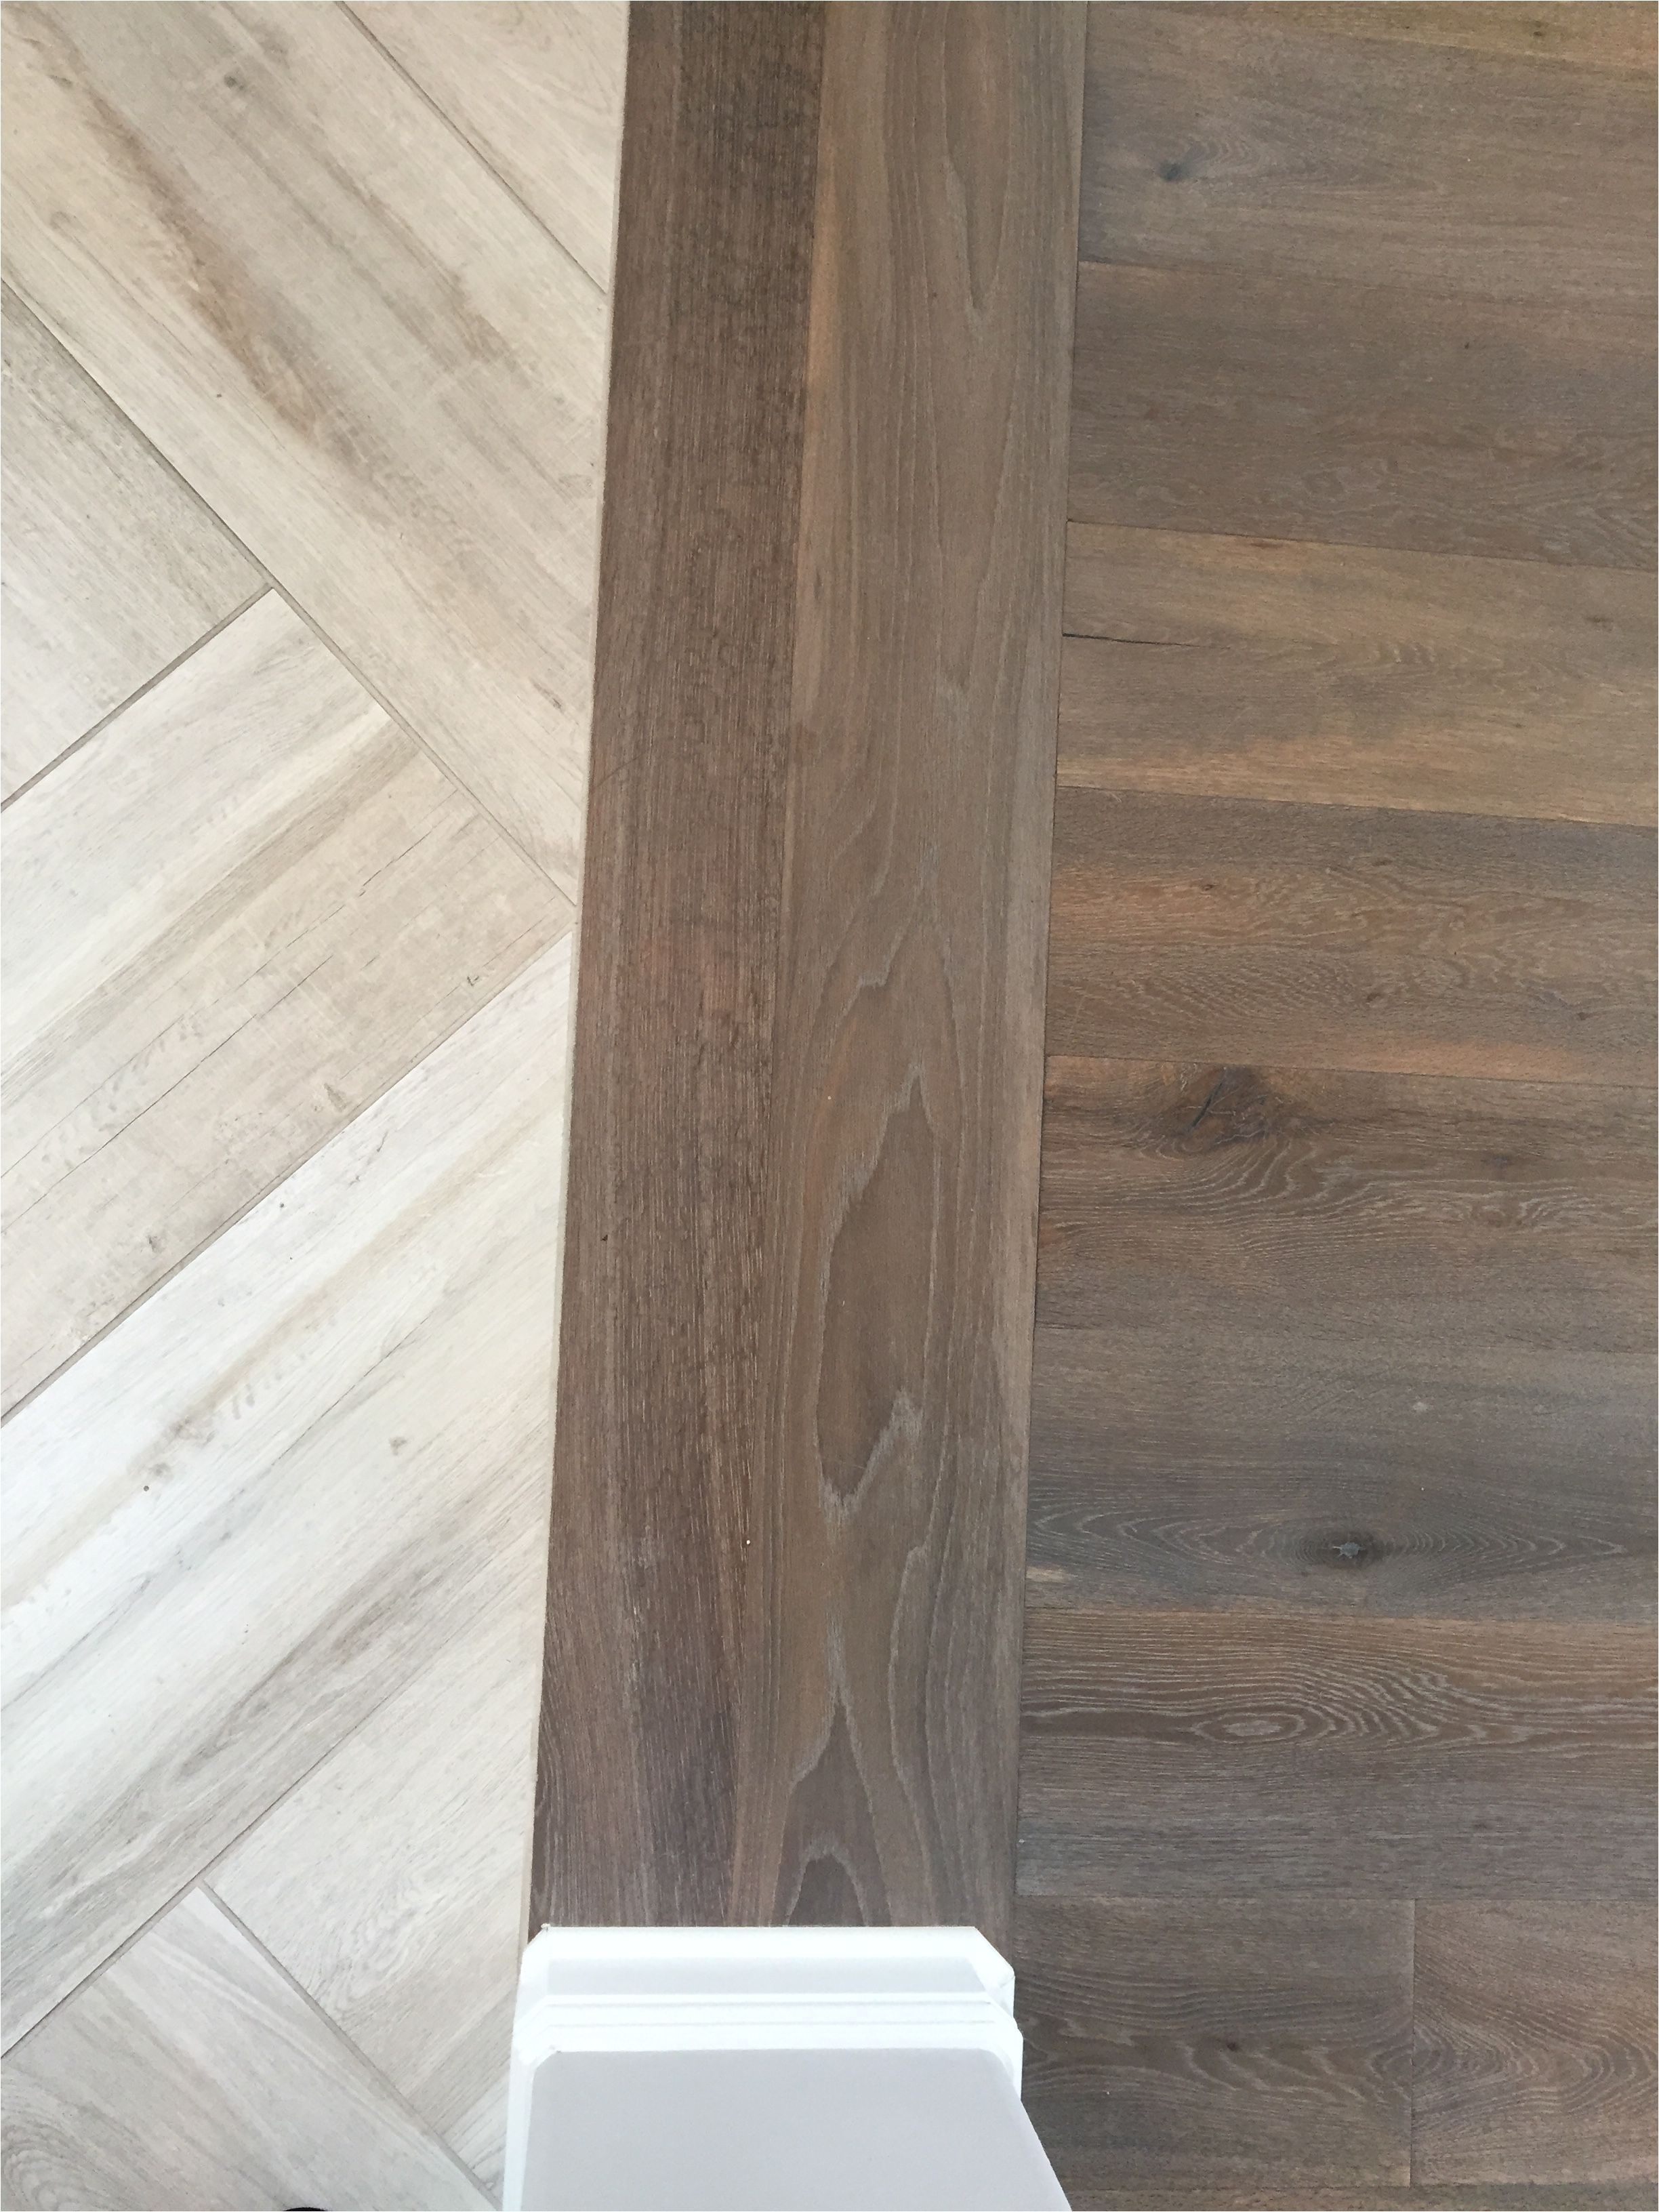 floor transition laminate to herringbone tile pattern